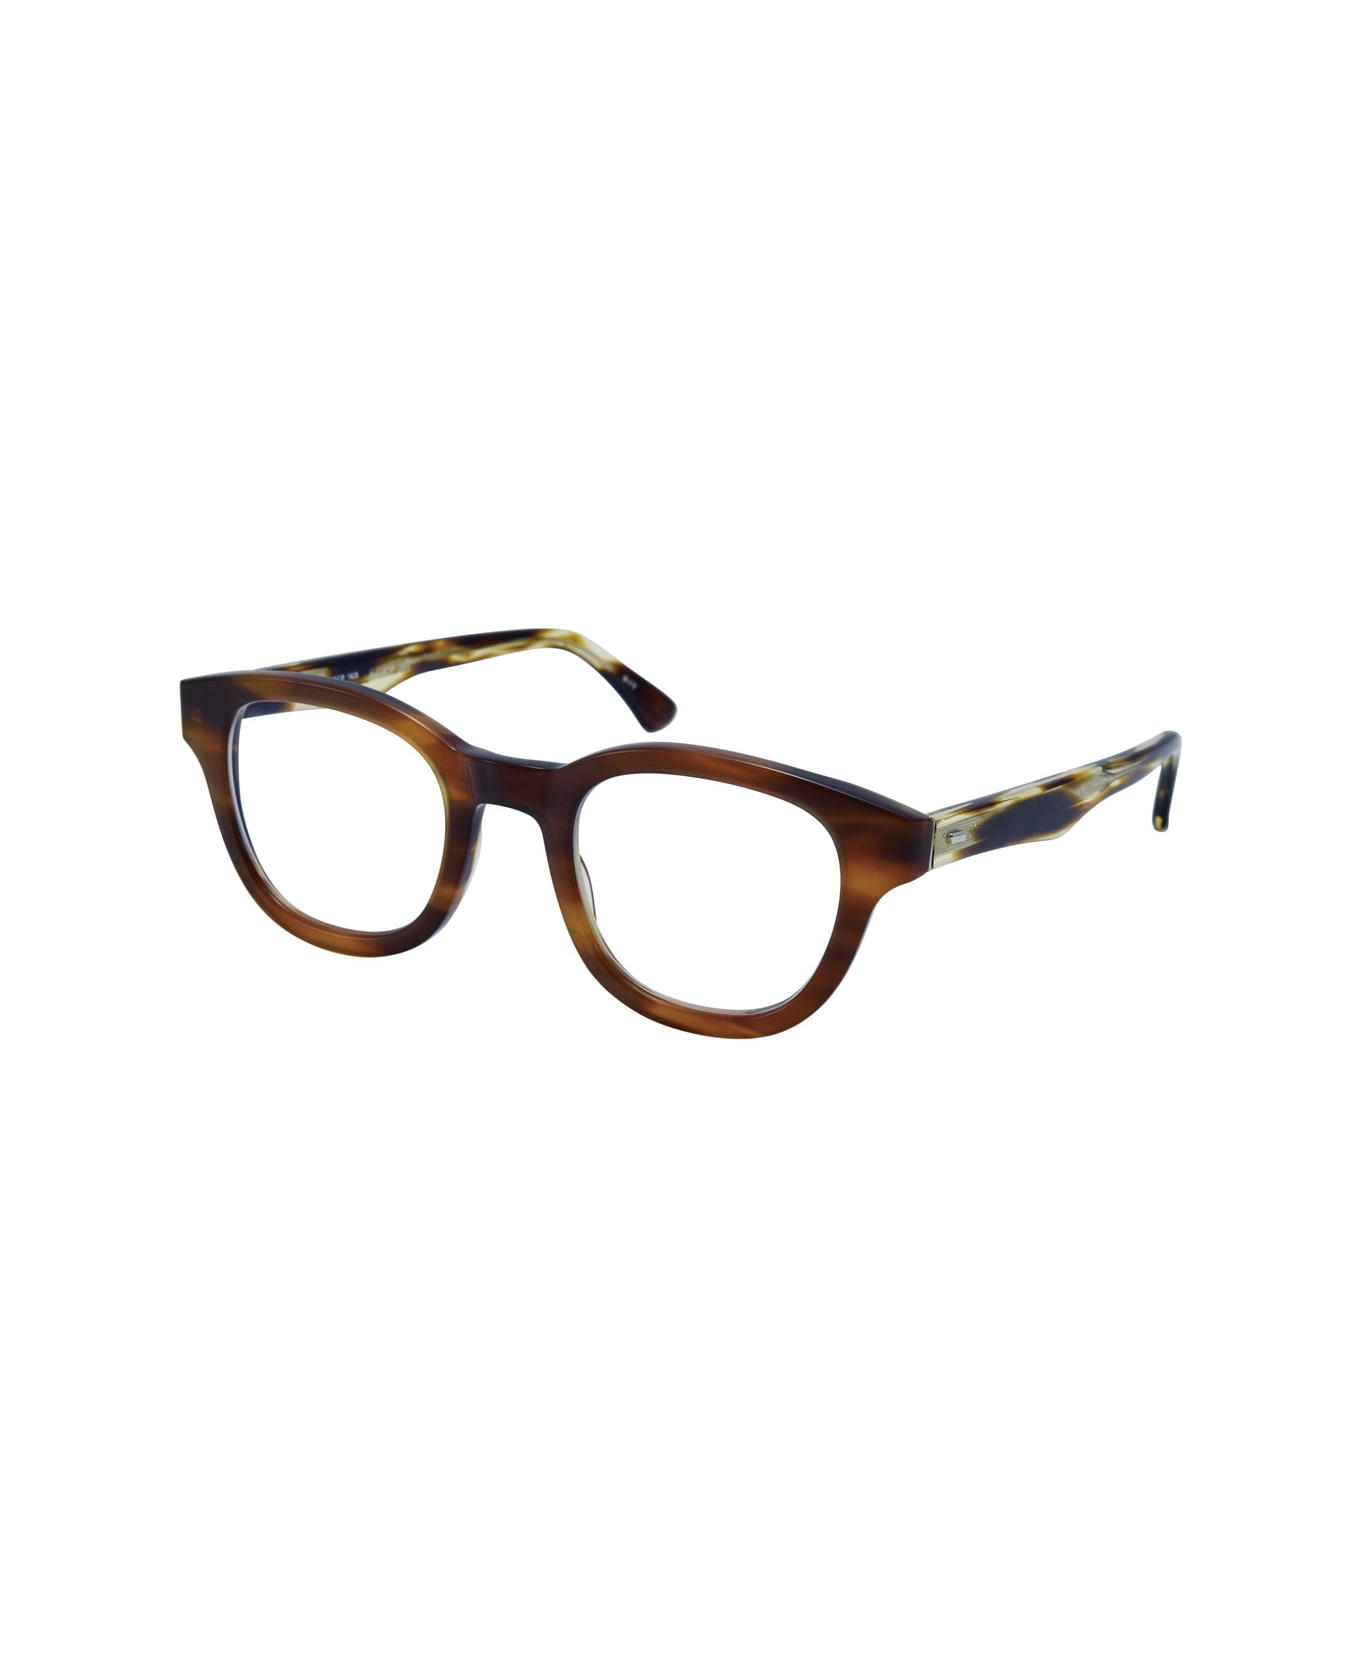 Masunaga 11dg4bl0a Glasses - Marrone アイウェア